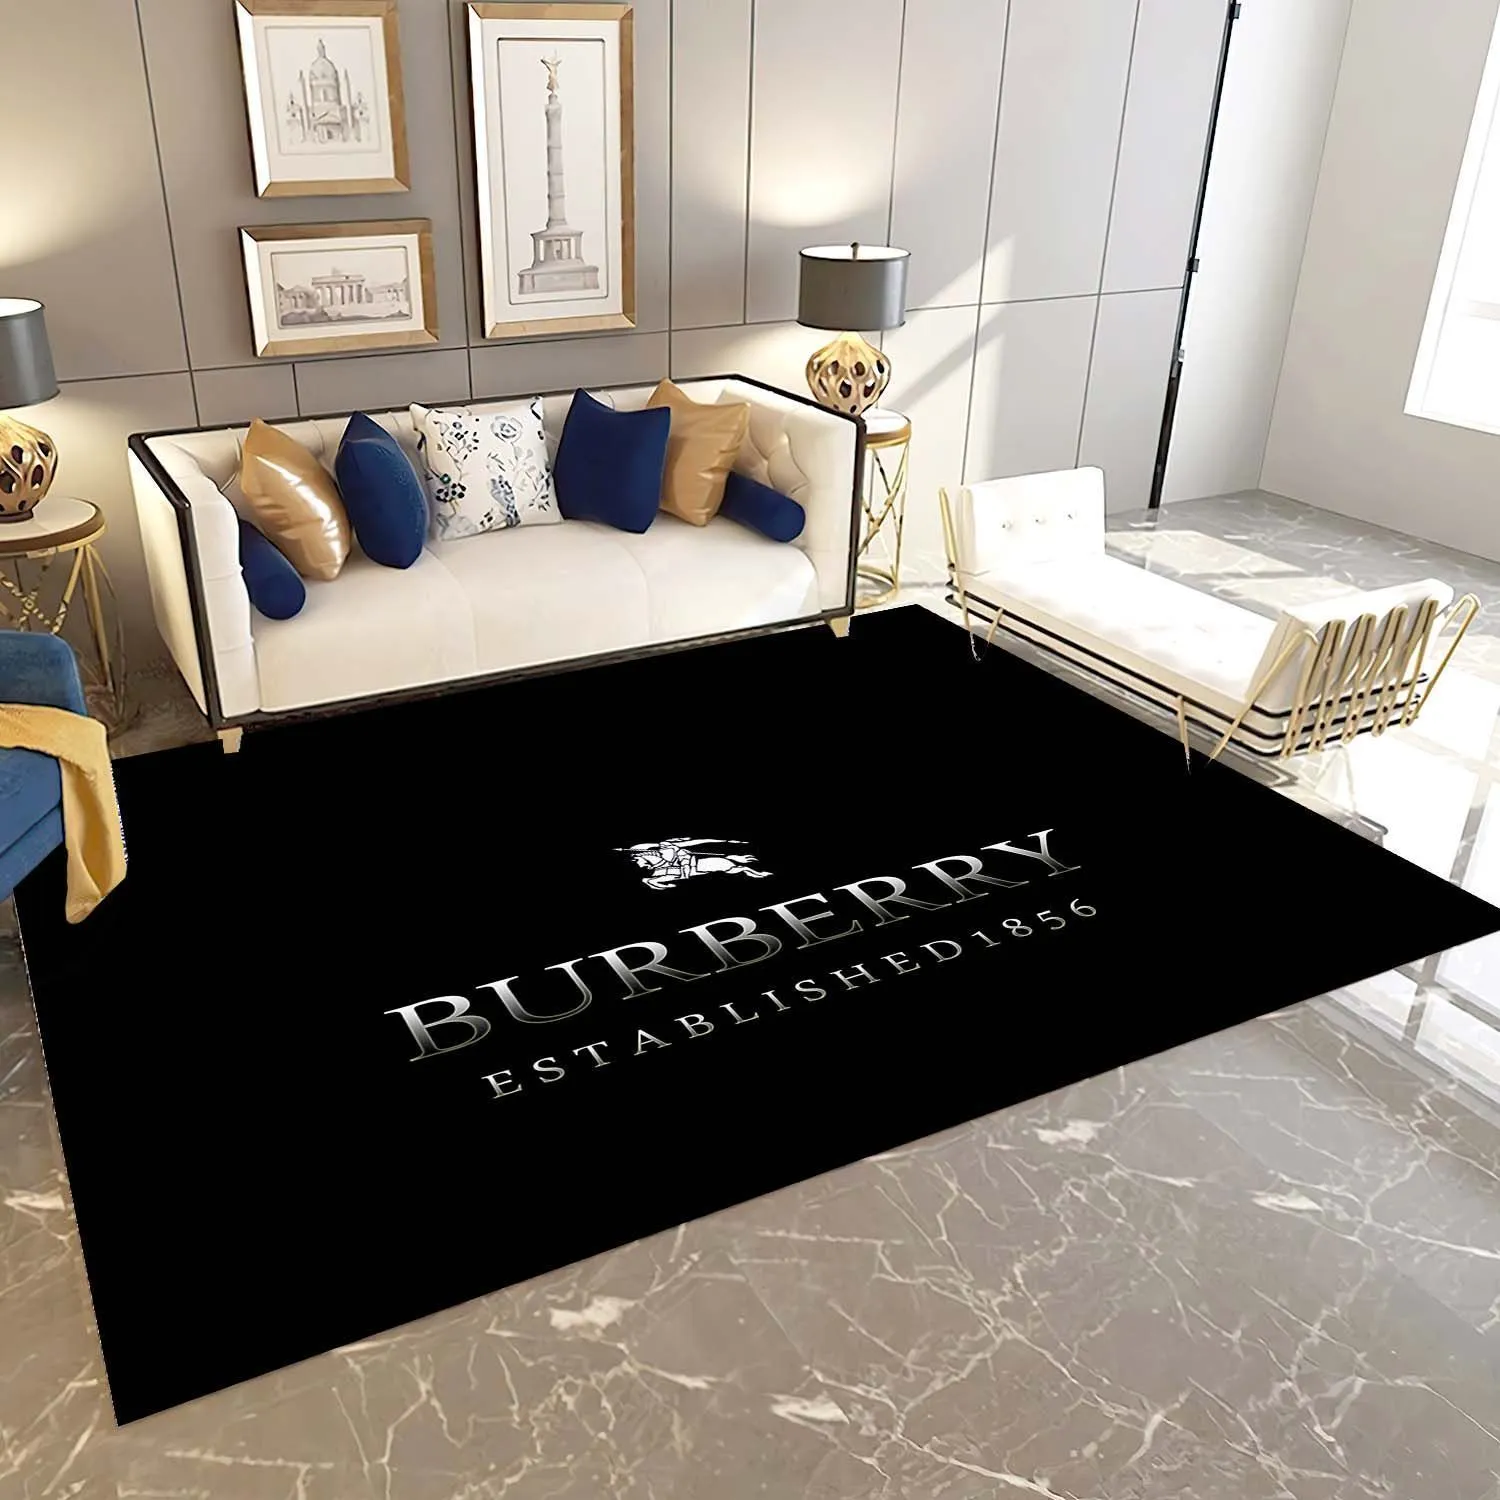 Burberry Dark Rectangle Rug Fashion Brand Area Carpet Luxury Door Mat Home Decor